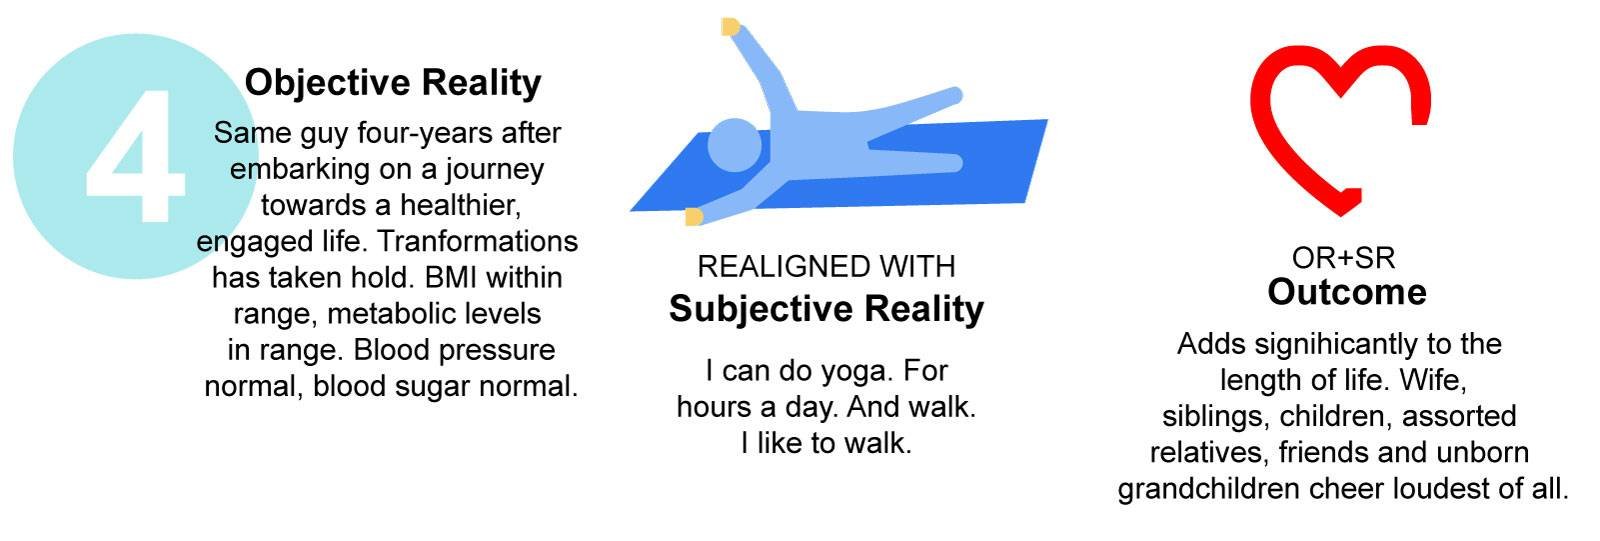 Objective 0Subjective Reality 4